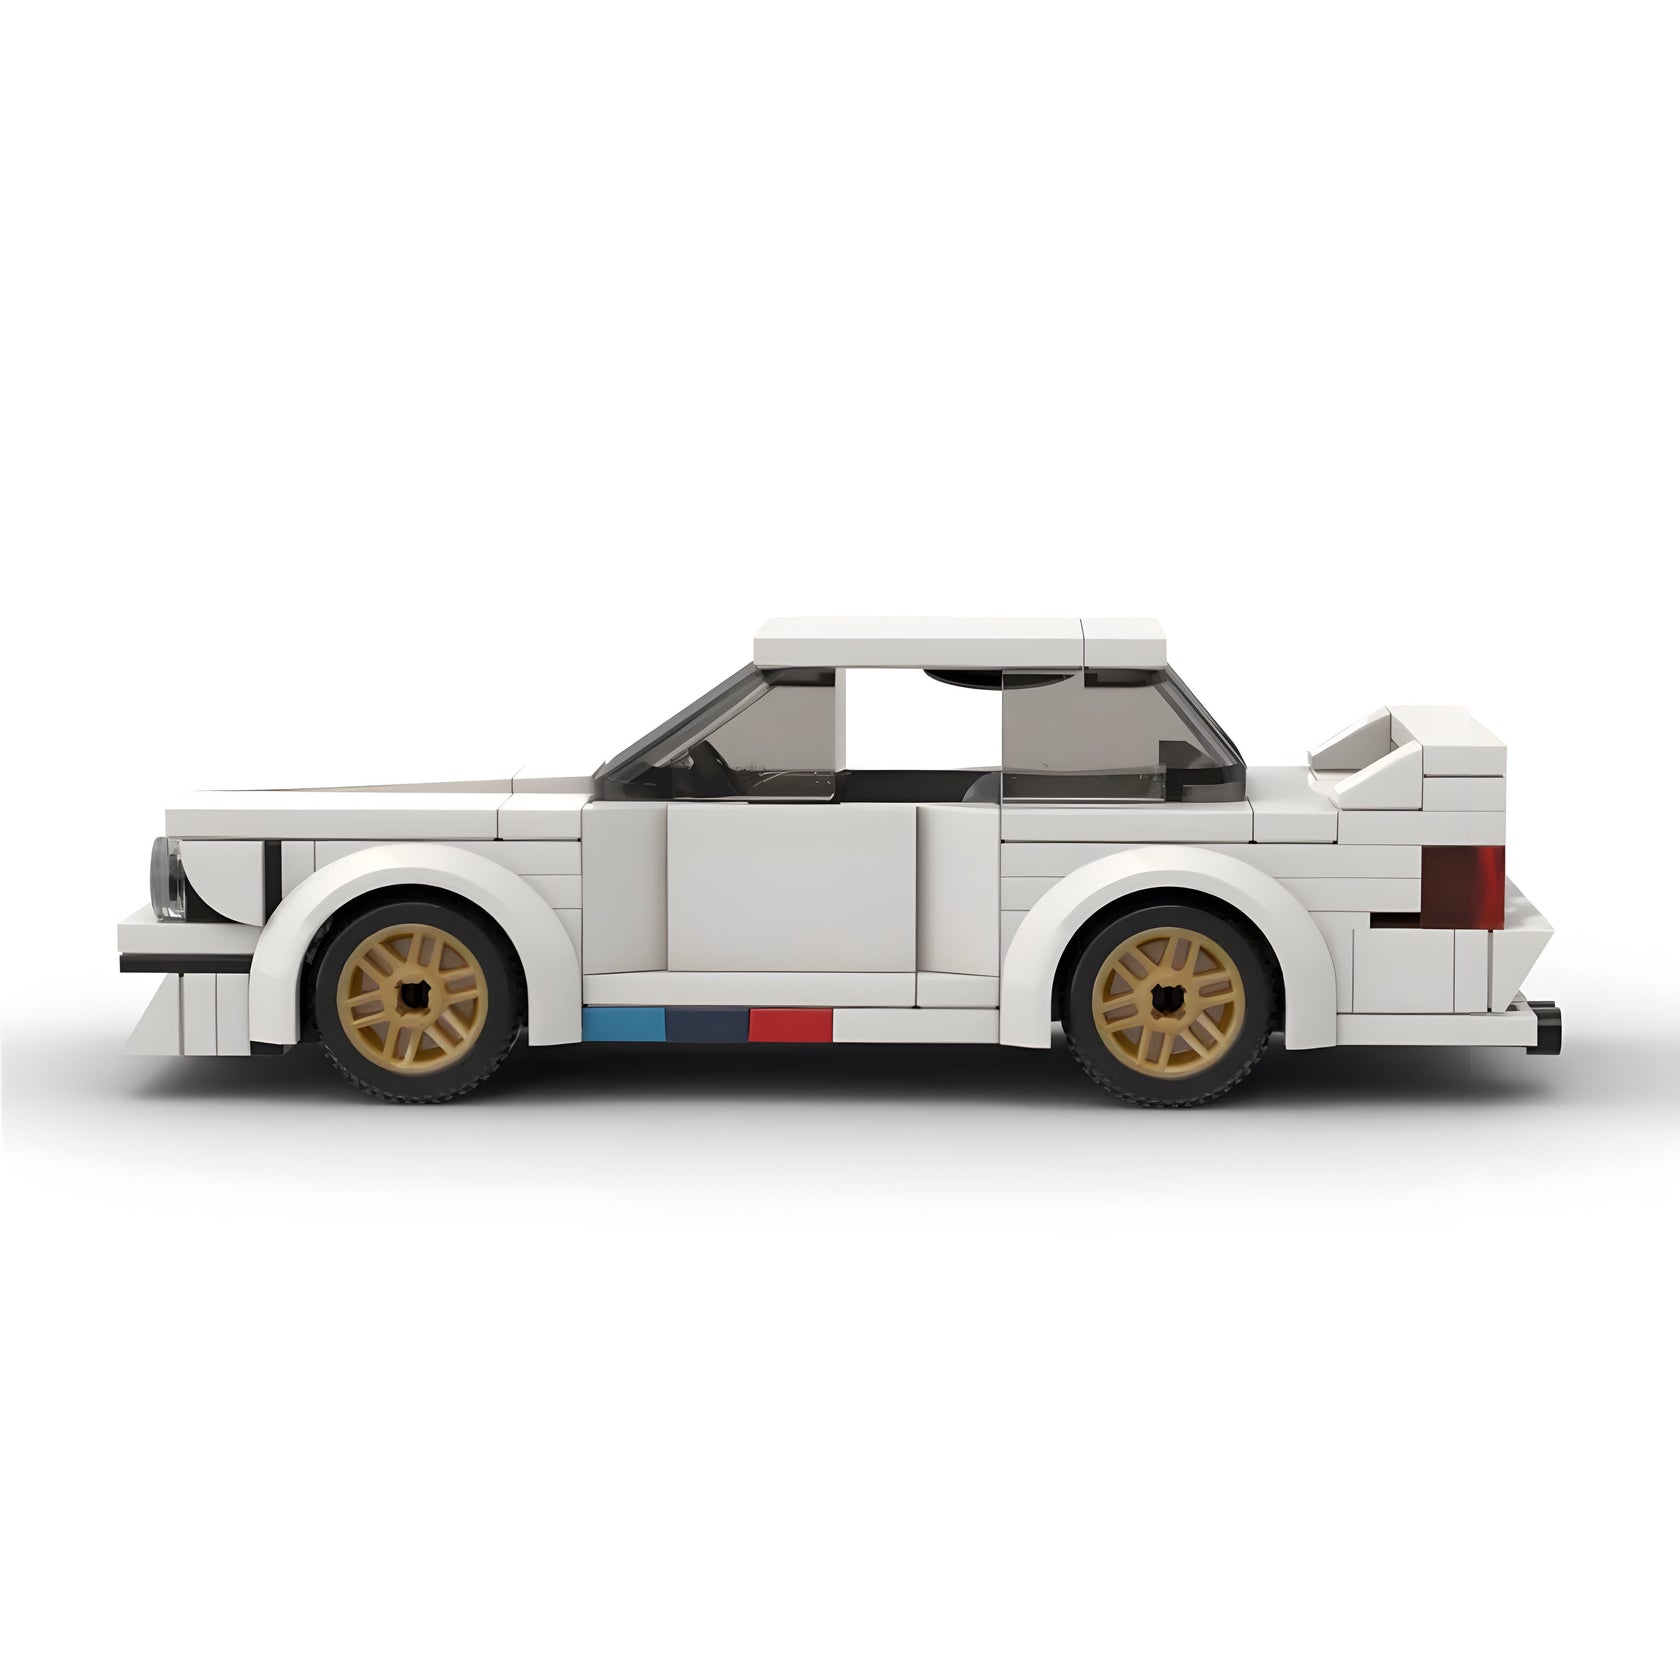 BMW M3 E30 made from lego building blocks